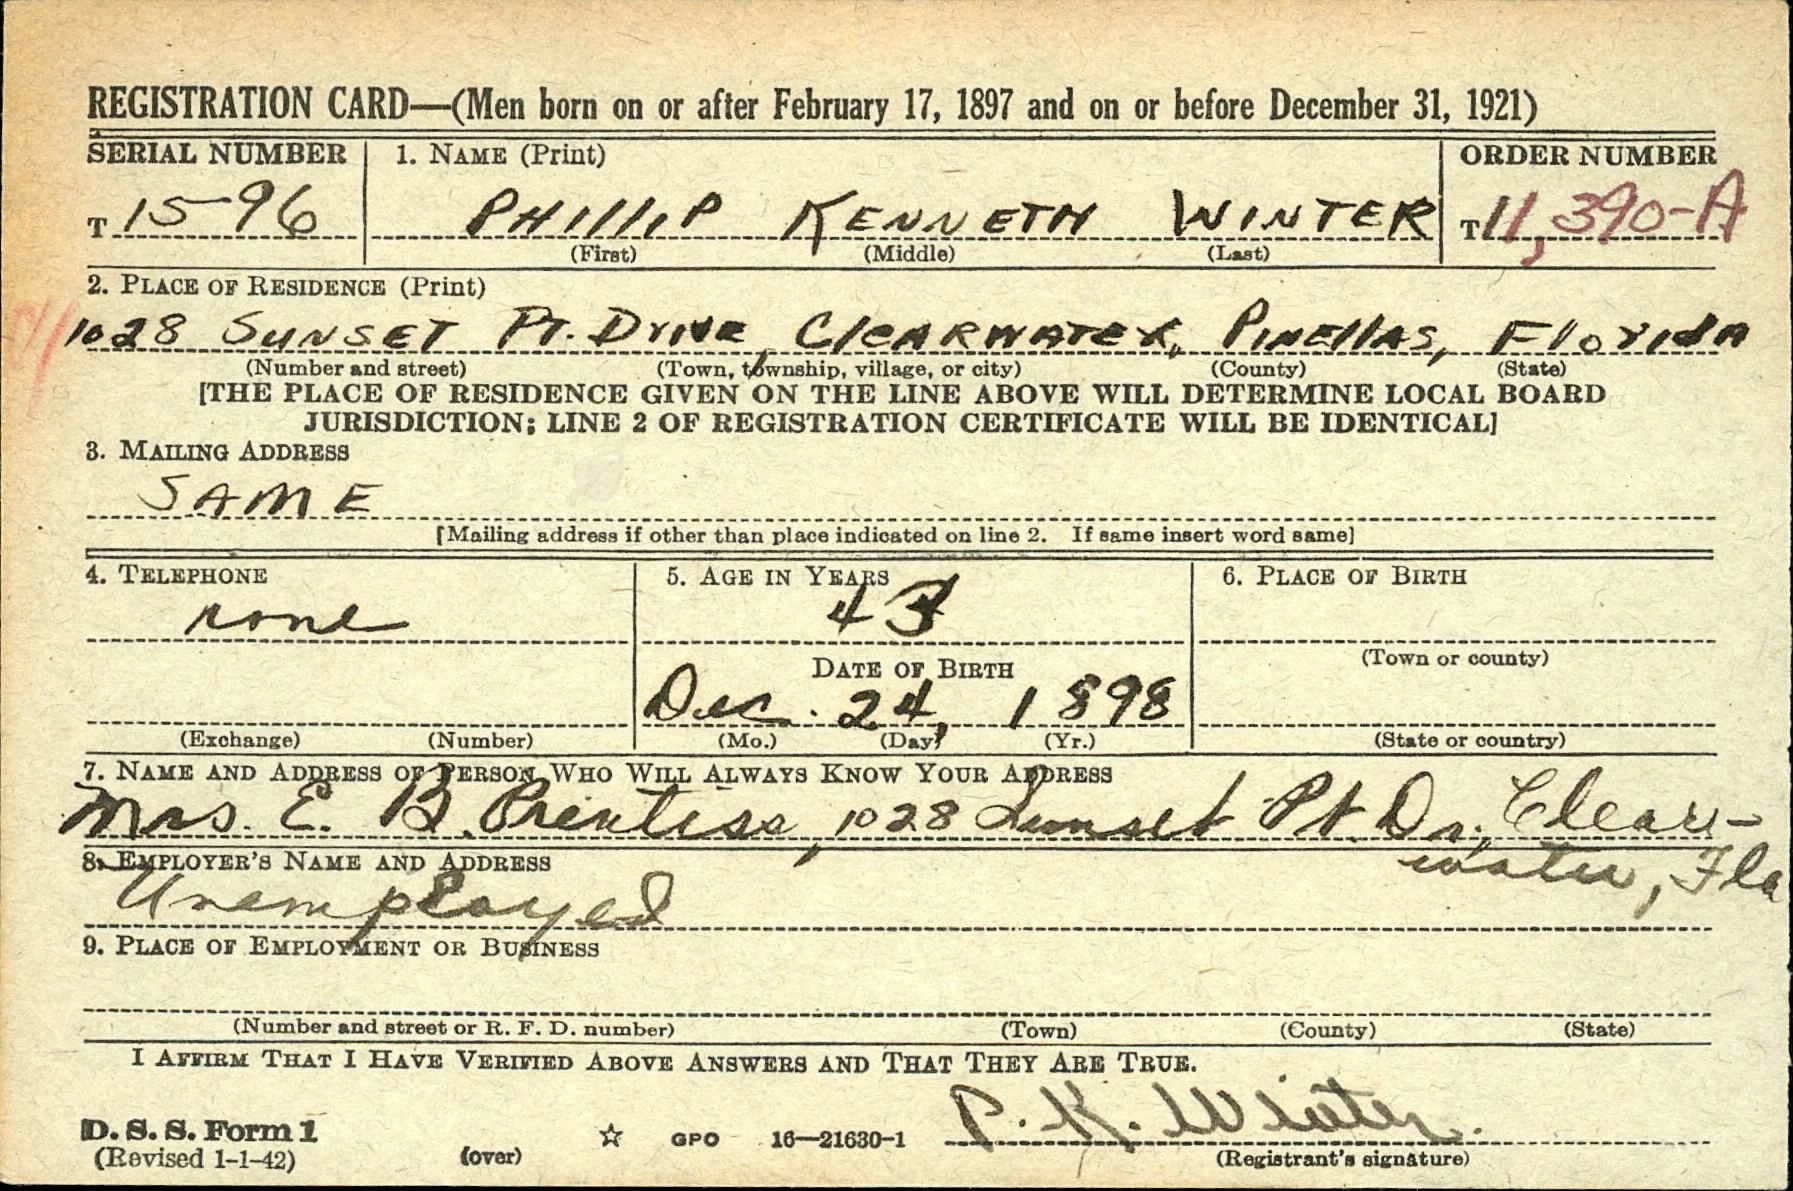 Phillip Winter WWII Registration Card